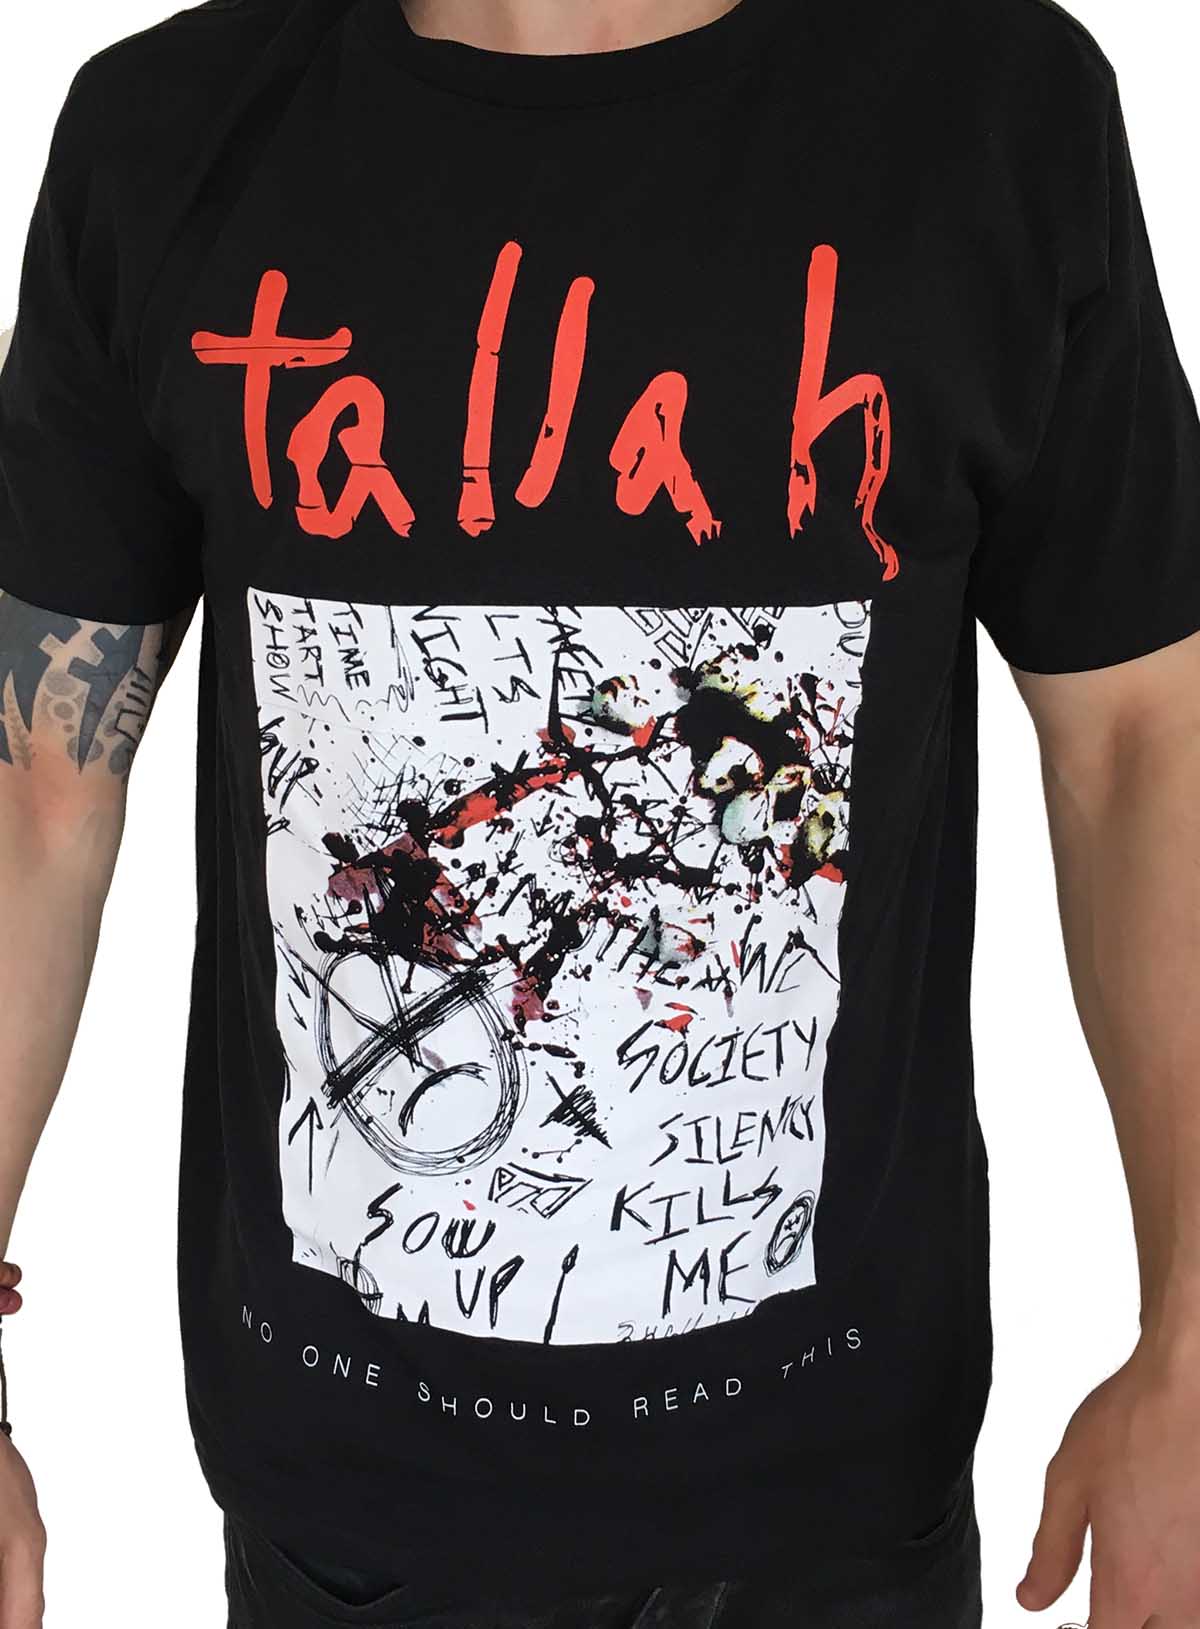 Tallah "No One Should Read This" T shirt